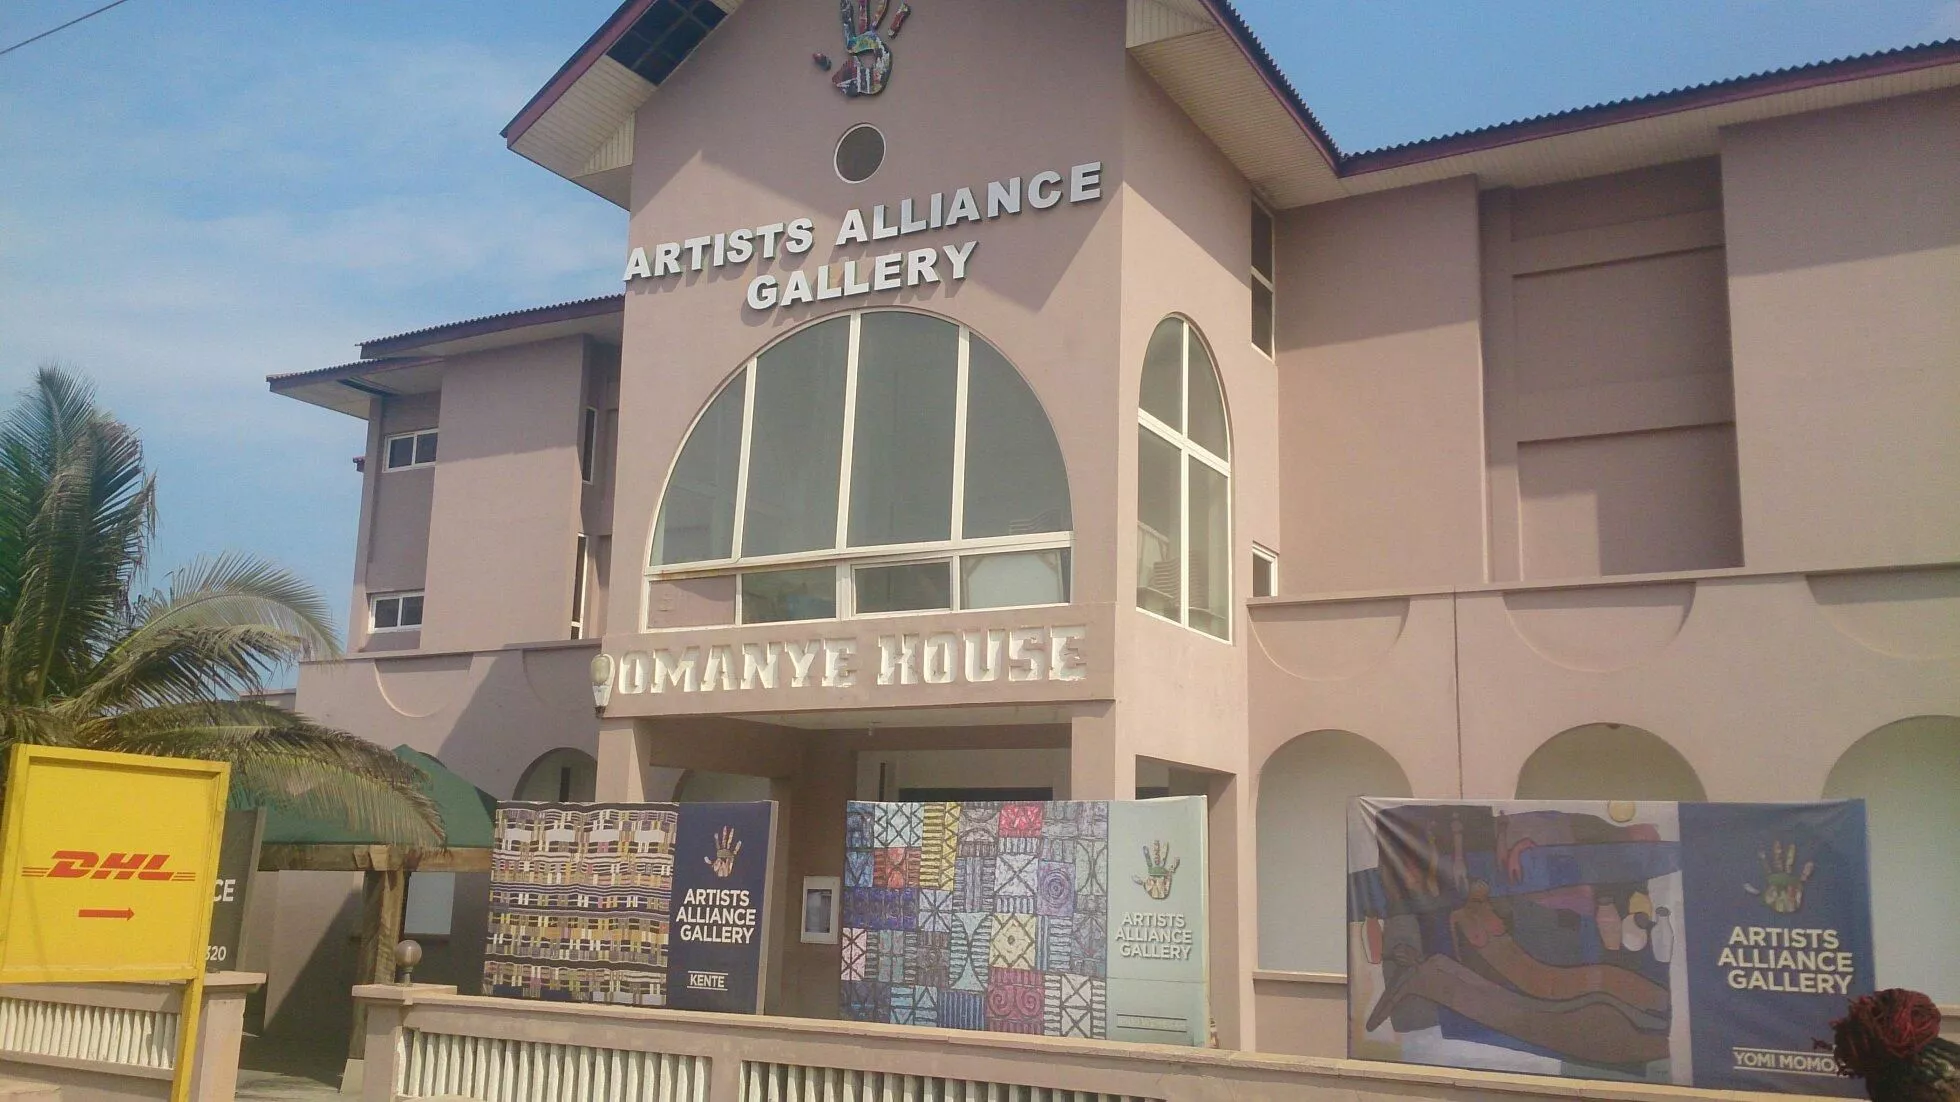 Artist Alliance Gallery in Ghana, Africa | Art Galleries - Rated 3.3